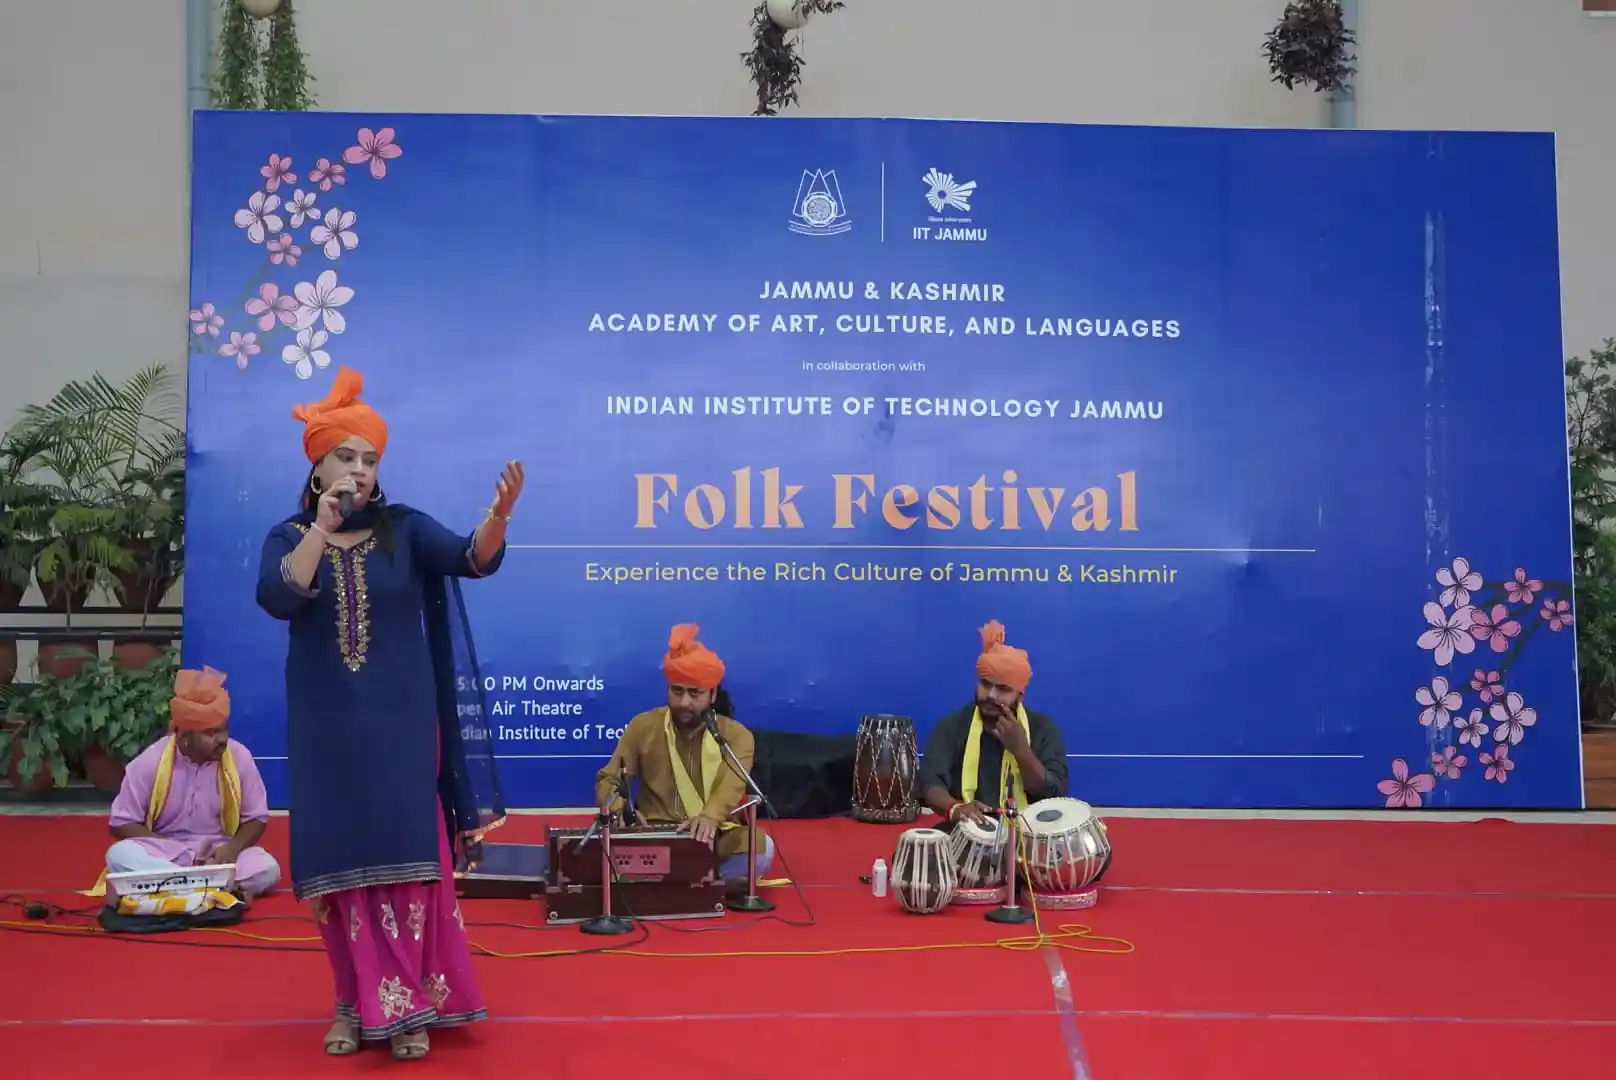 IIT Jammu Cultural Events